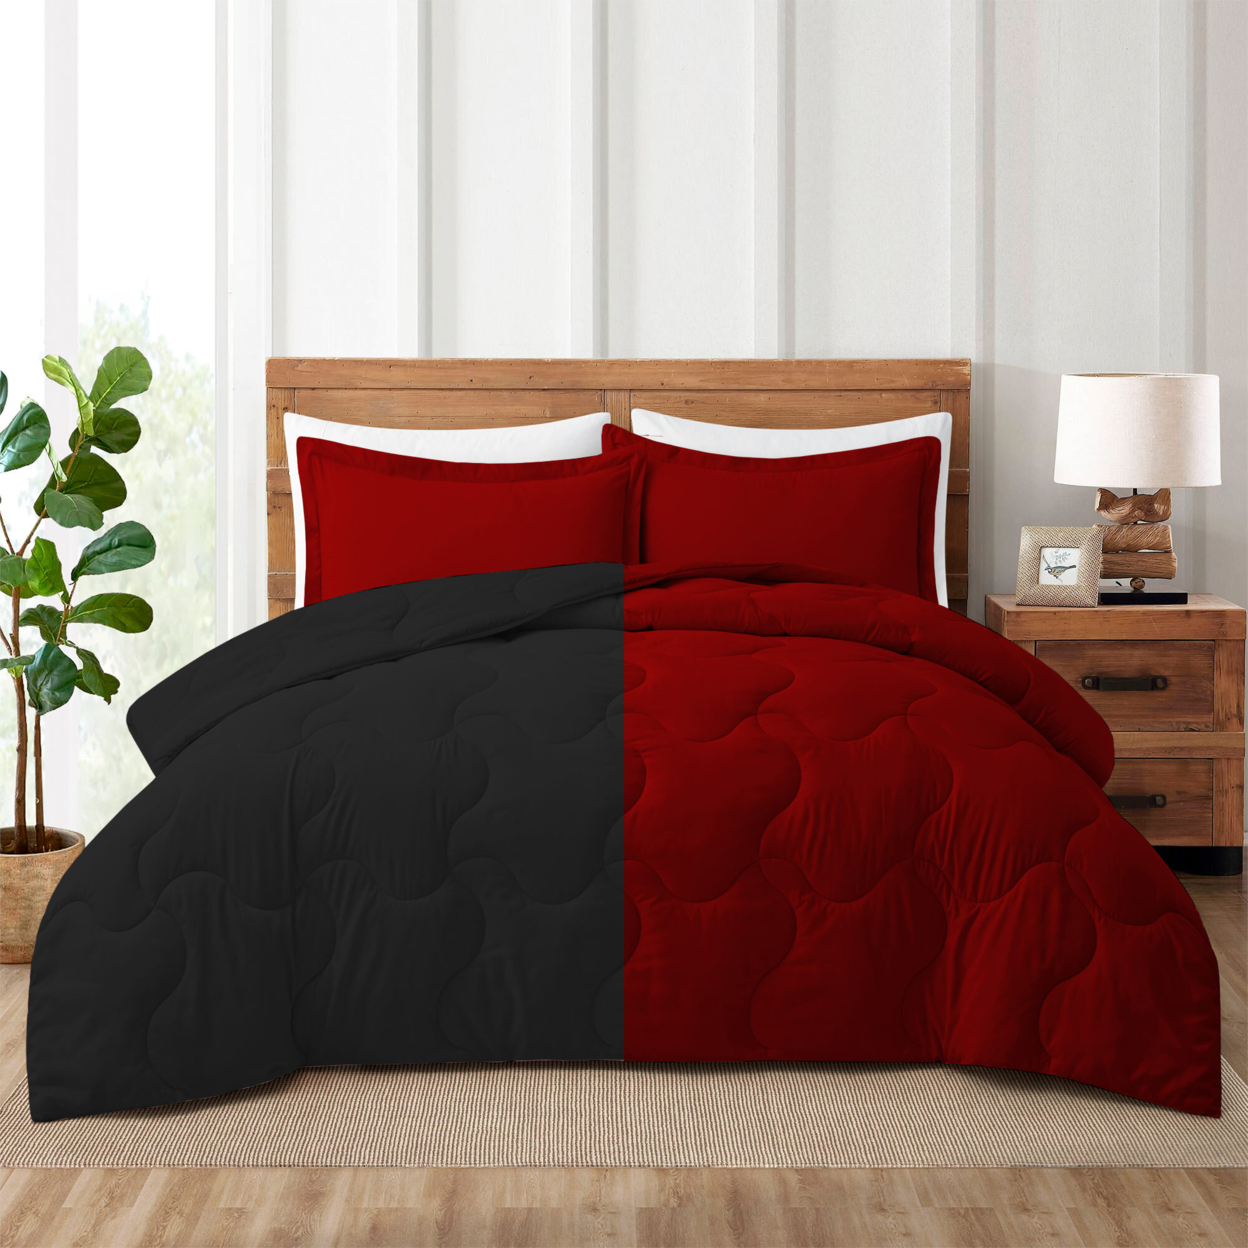 3 Or 2 Pieces Lightweight Reversible Comforter Set With Pillow Shams - Dark Grey/Light Grey, King